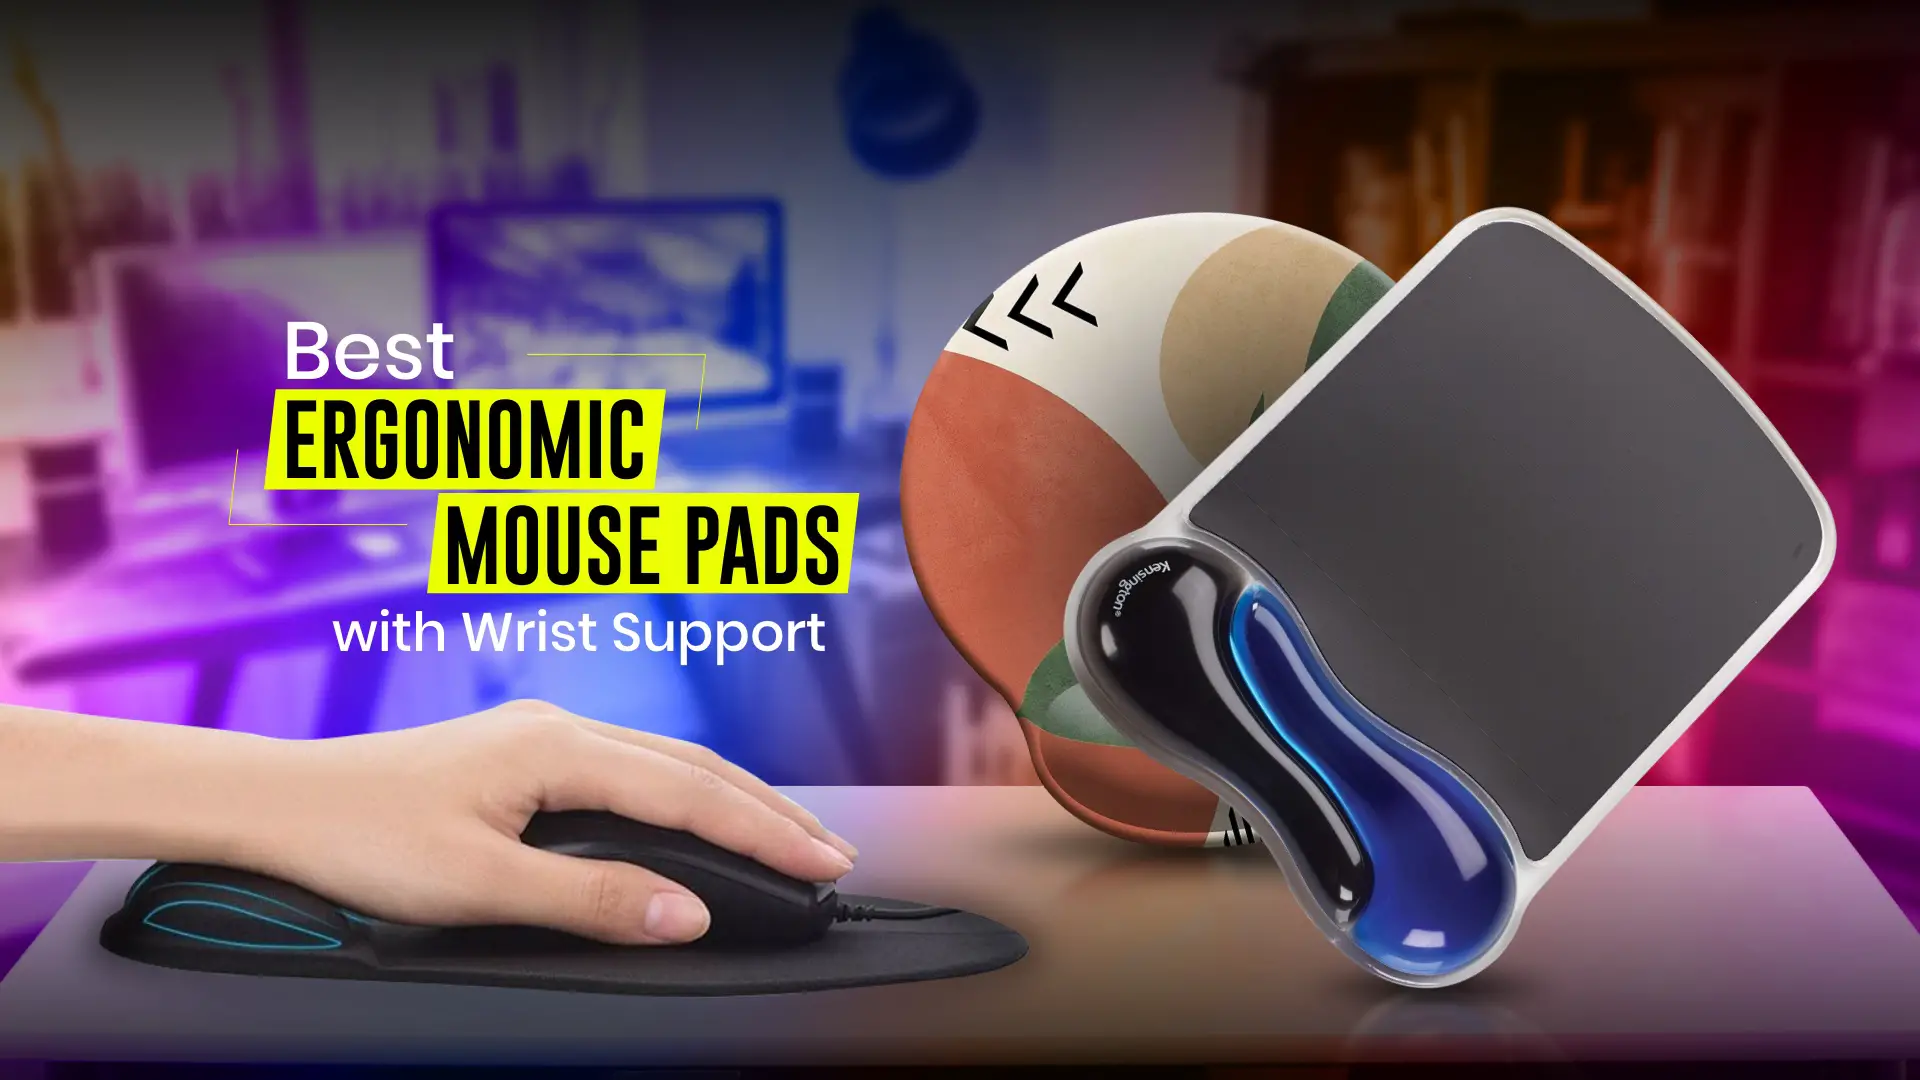 Nyttig Samuel ligevægt 11 Best Ergonomic Mouse Pads with Wrist Support in 2023 - Techtouchy